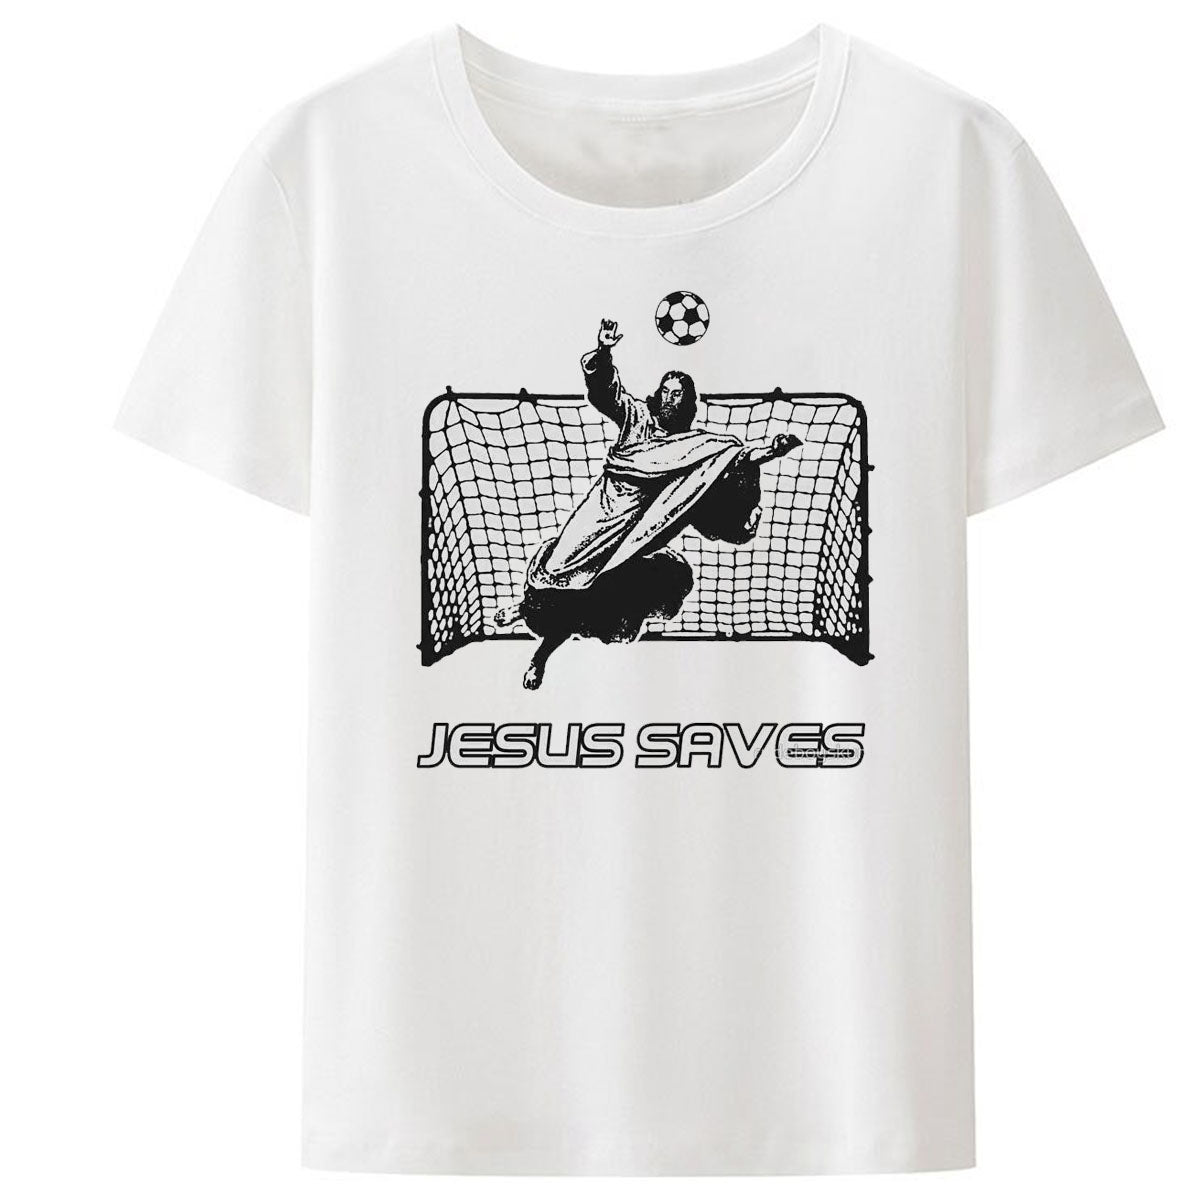 Christianartbag Funny T-Shirt, Christian Art Shirt, Jesus Save, Christian humor, Funny religious shirts, Unisex T-shirt. - Christian Art Bag